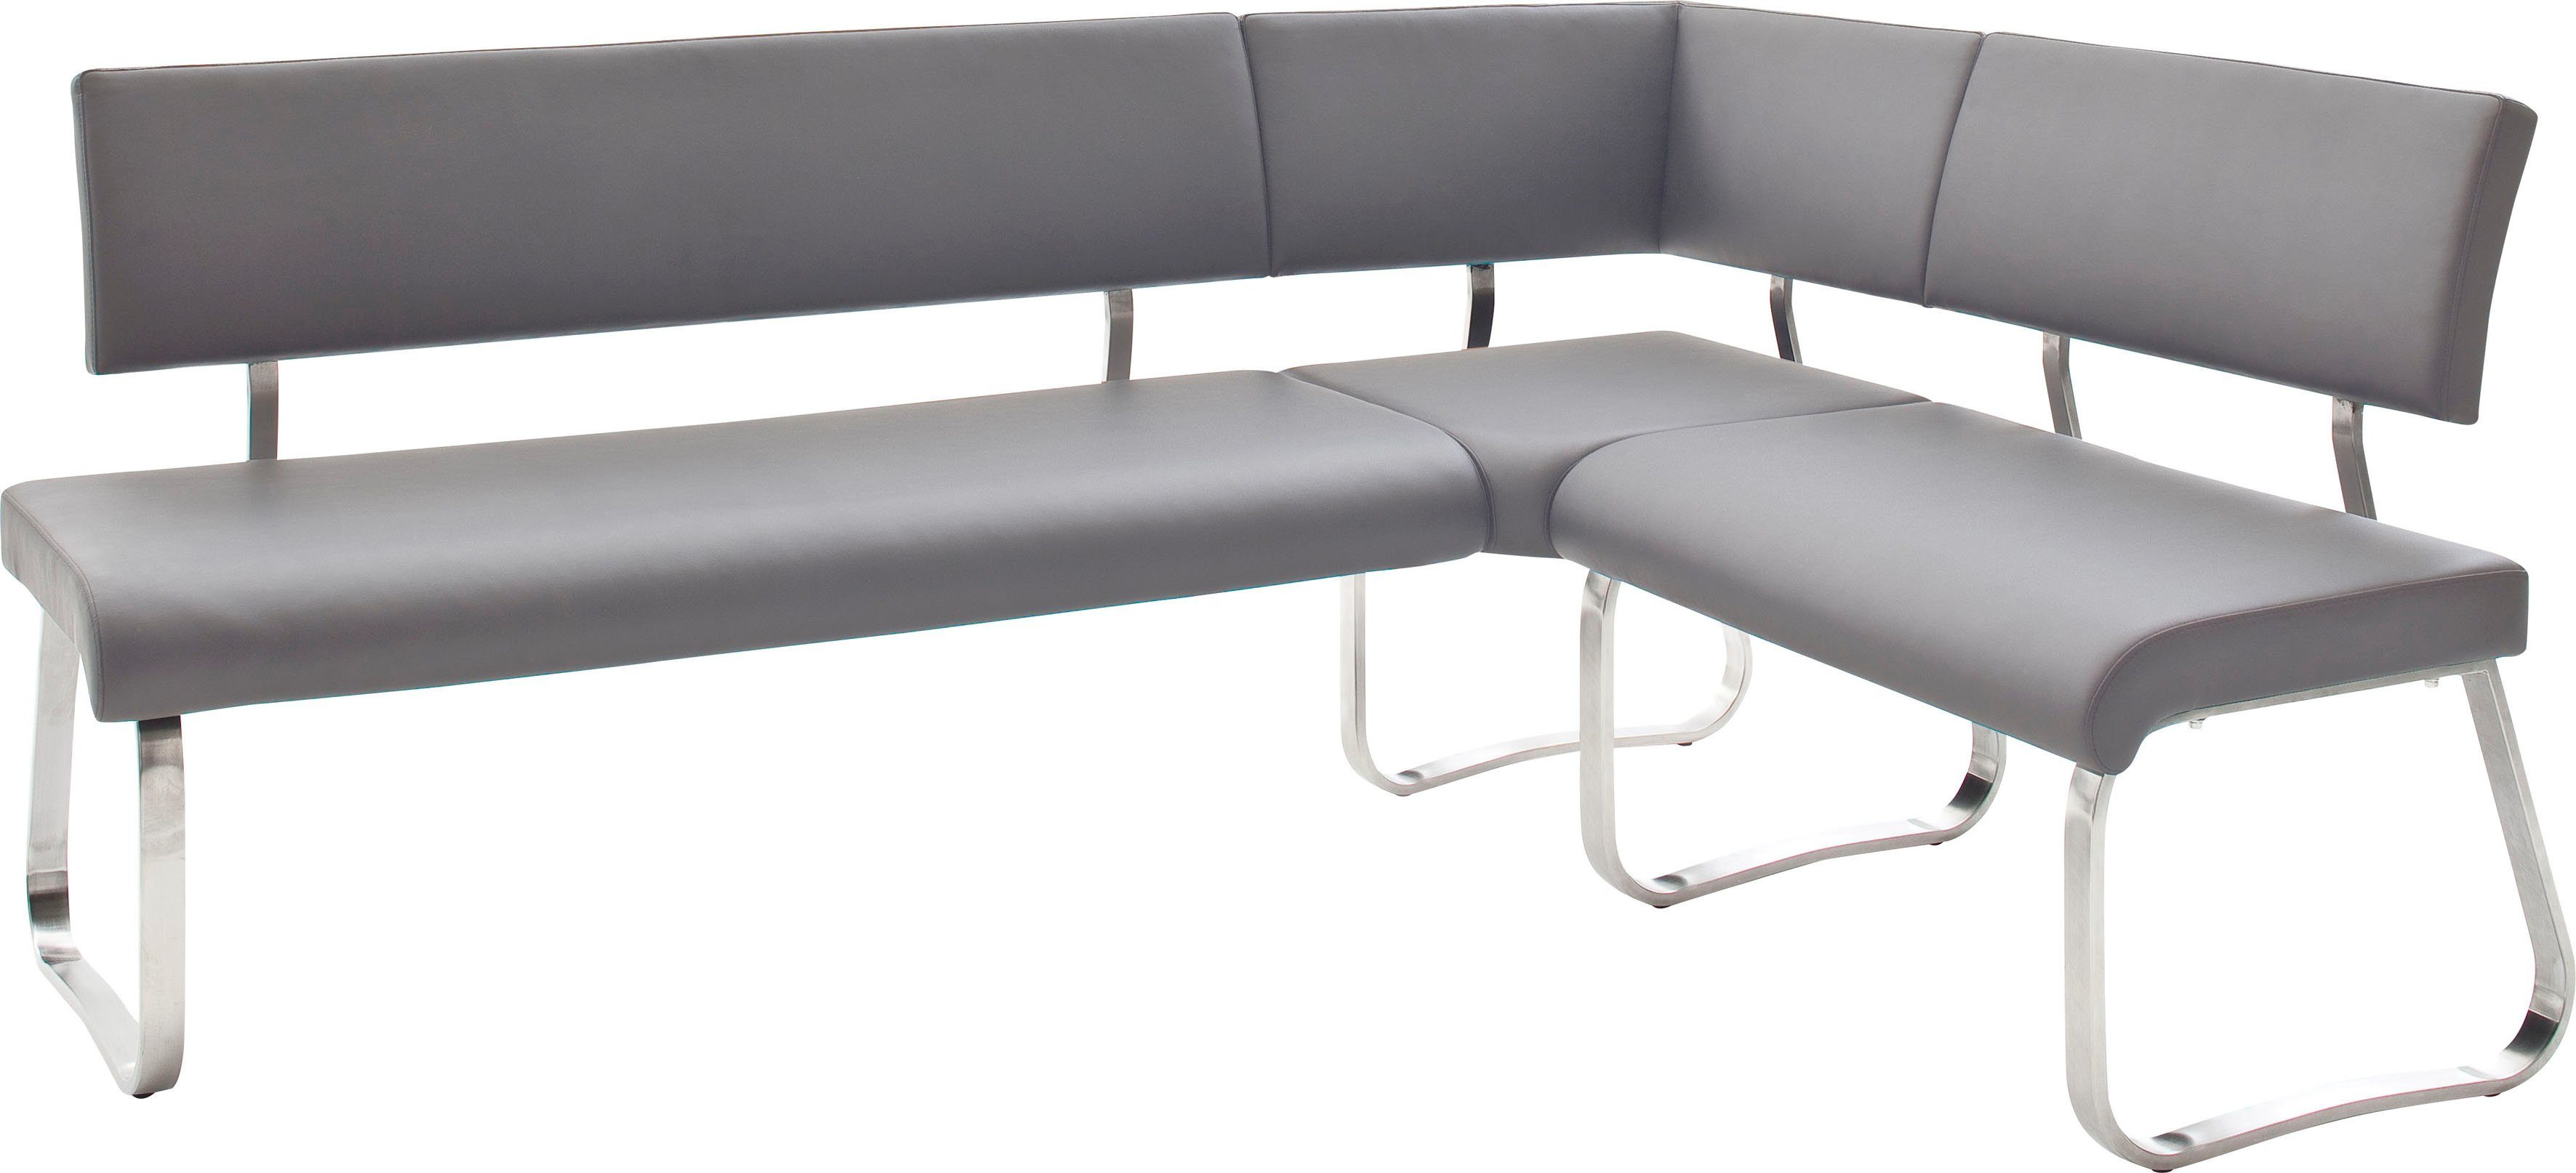 MCA furniture Eckbank Arco, Raum frei bis im Eckbank belastbar stellbar, Breite 500 Grau kg 200 cm